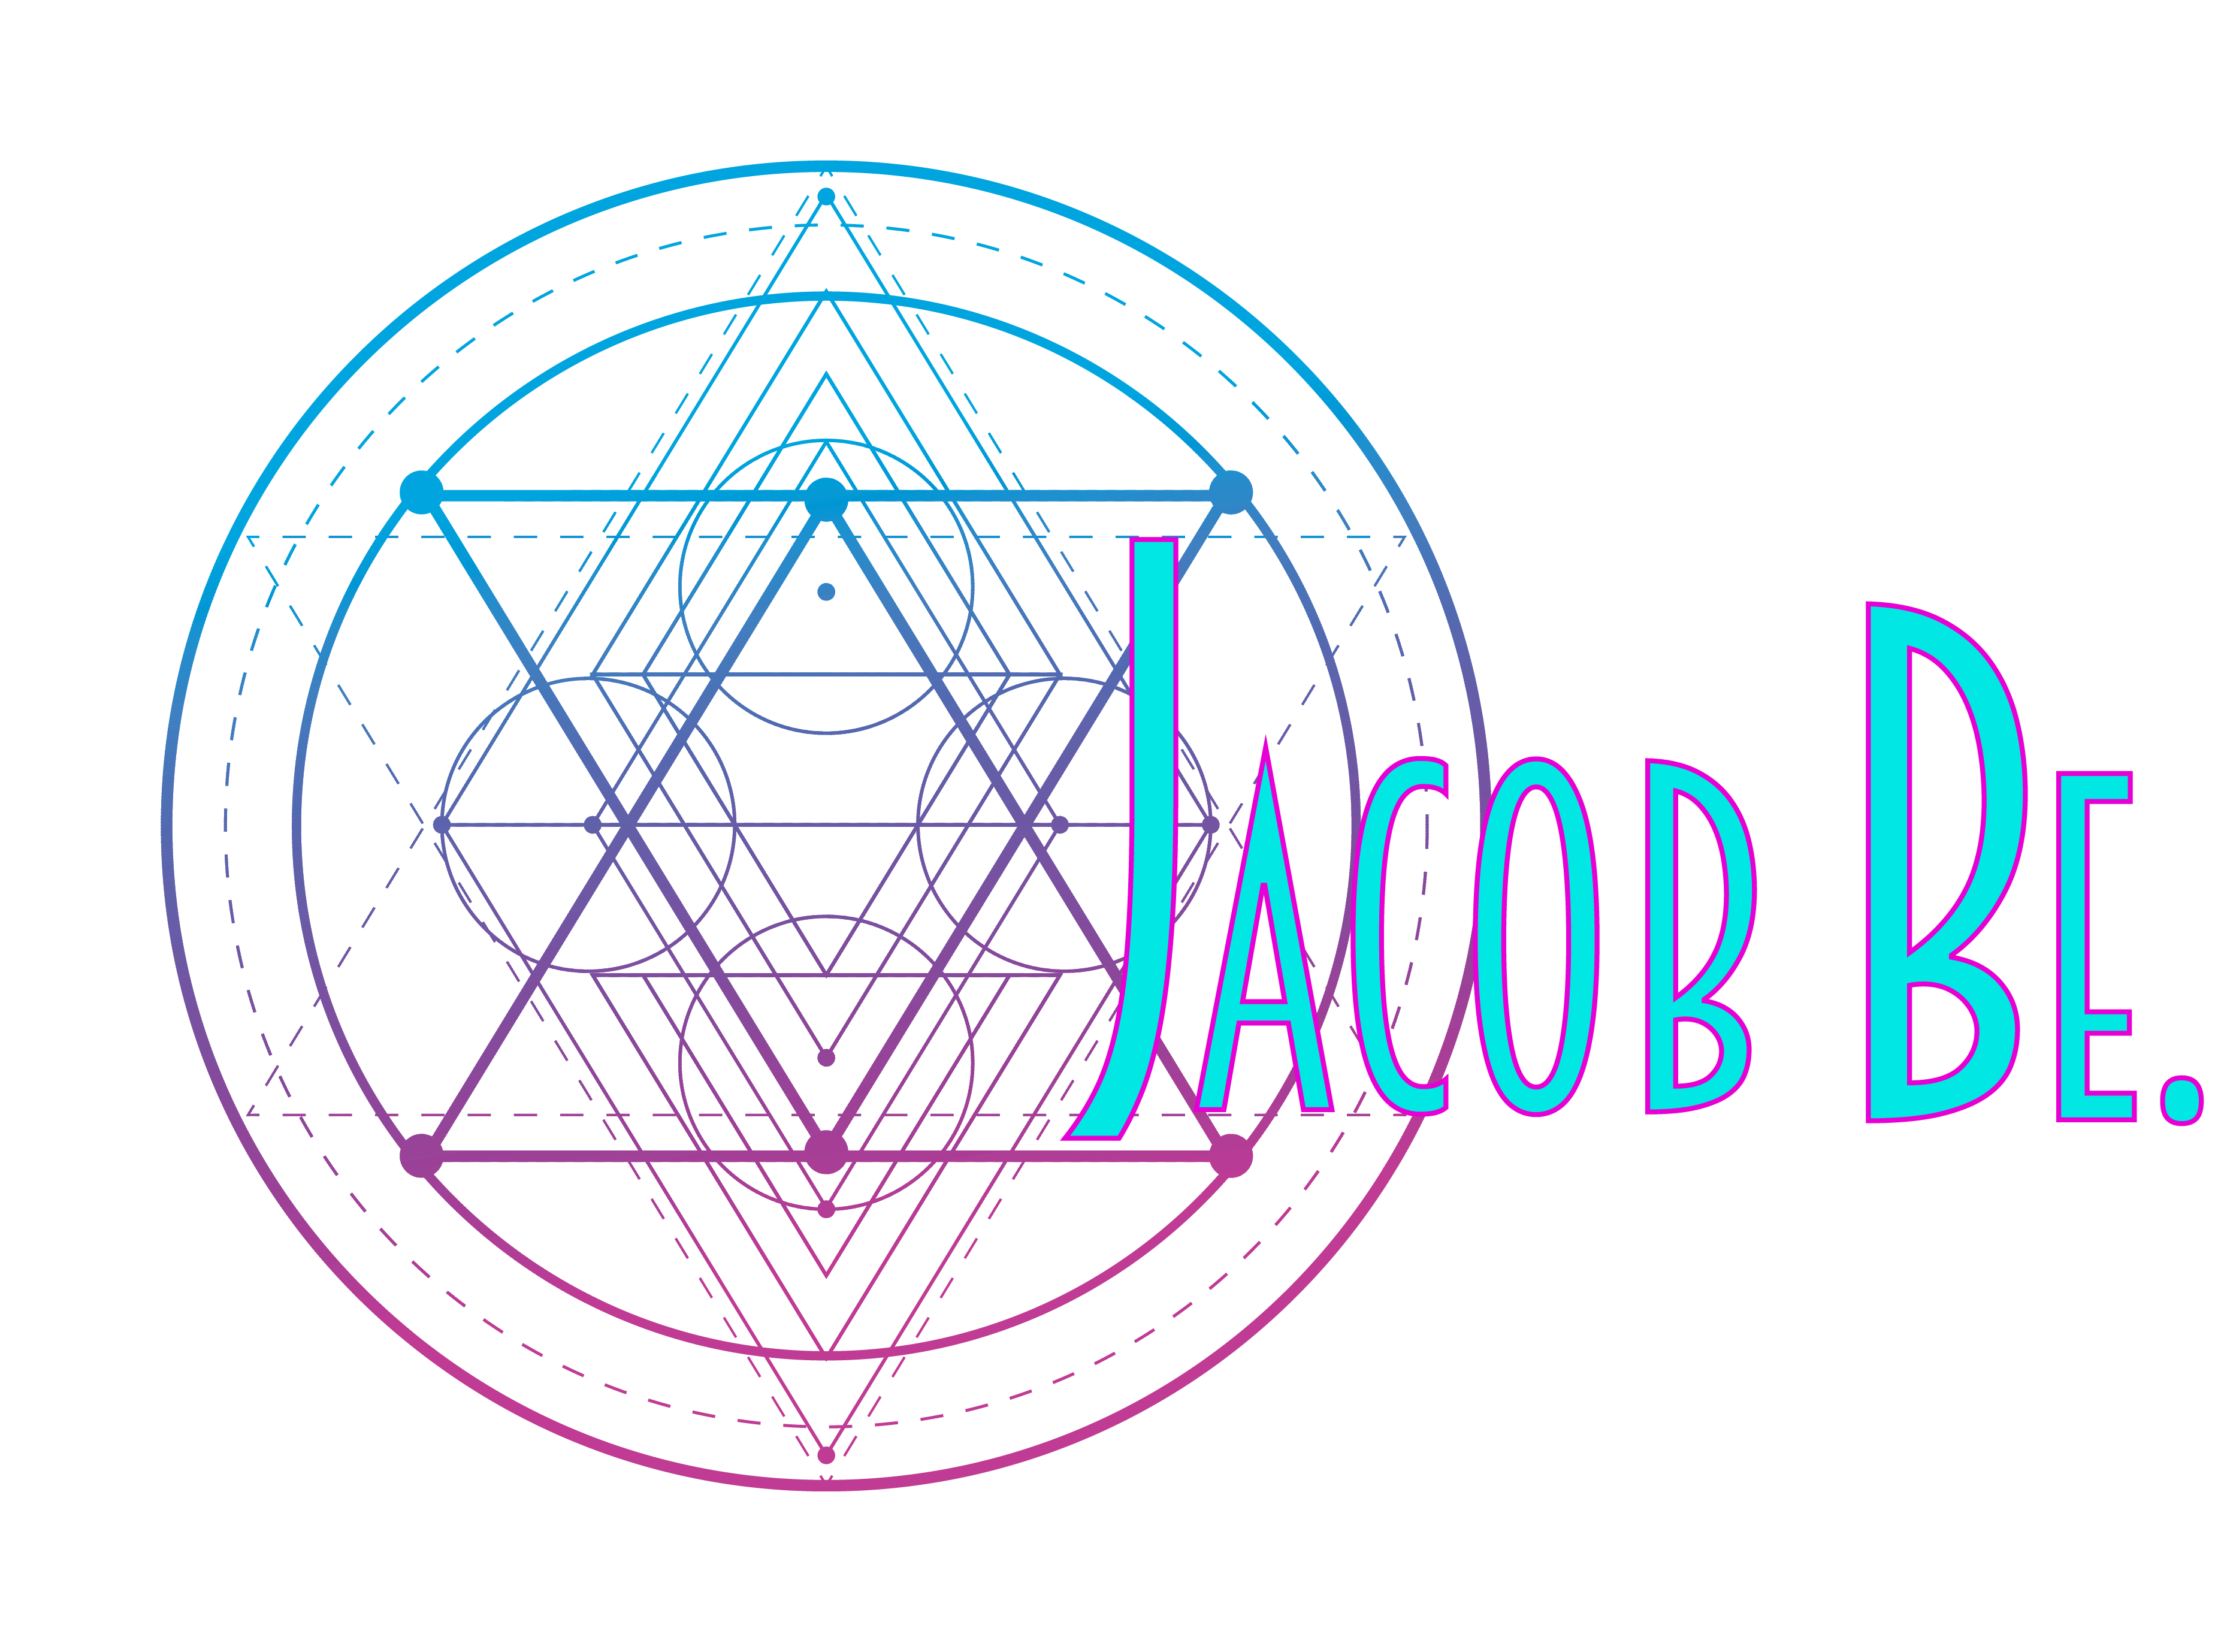 Jacob Be.